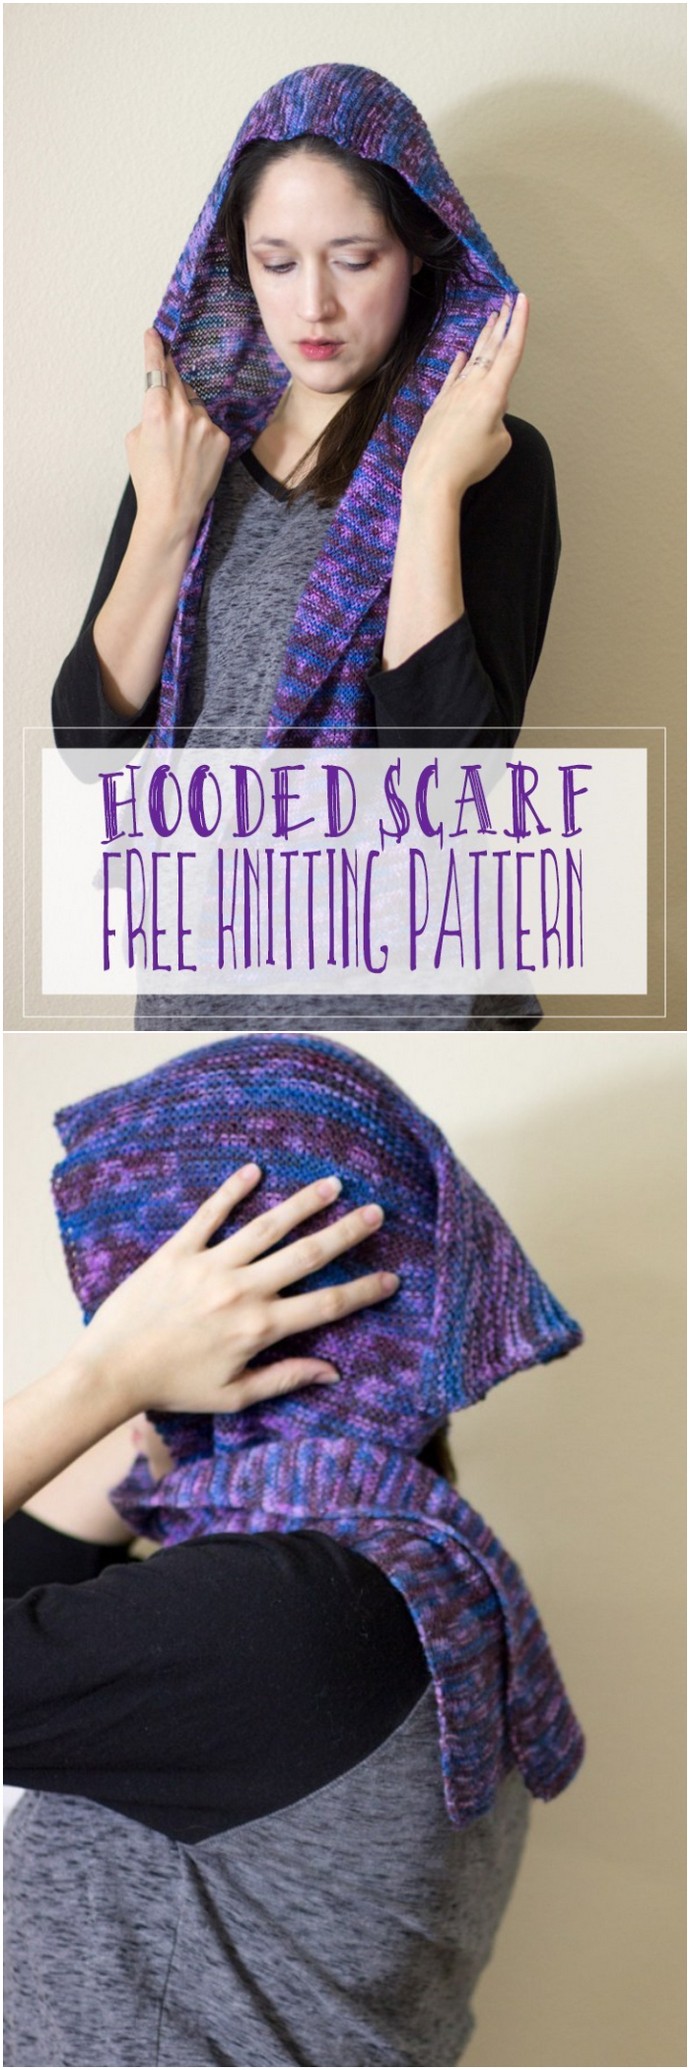 Hooded Scarf Free Knitting Pattern